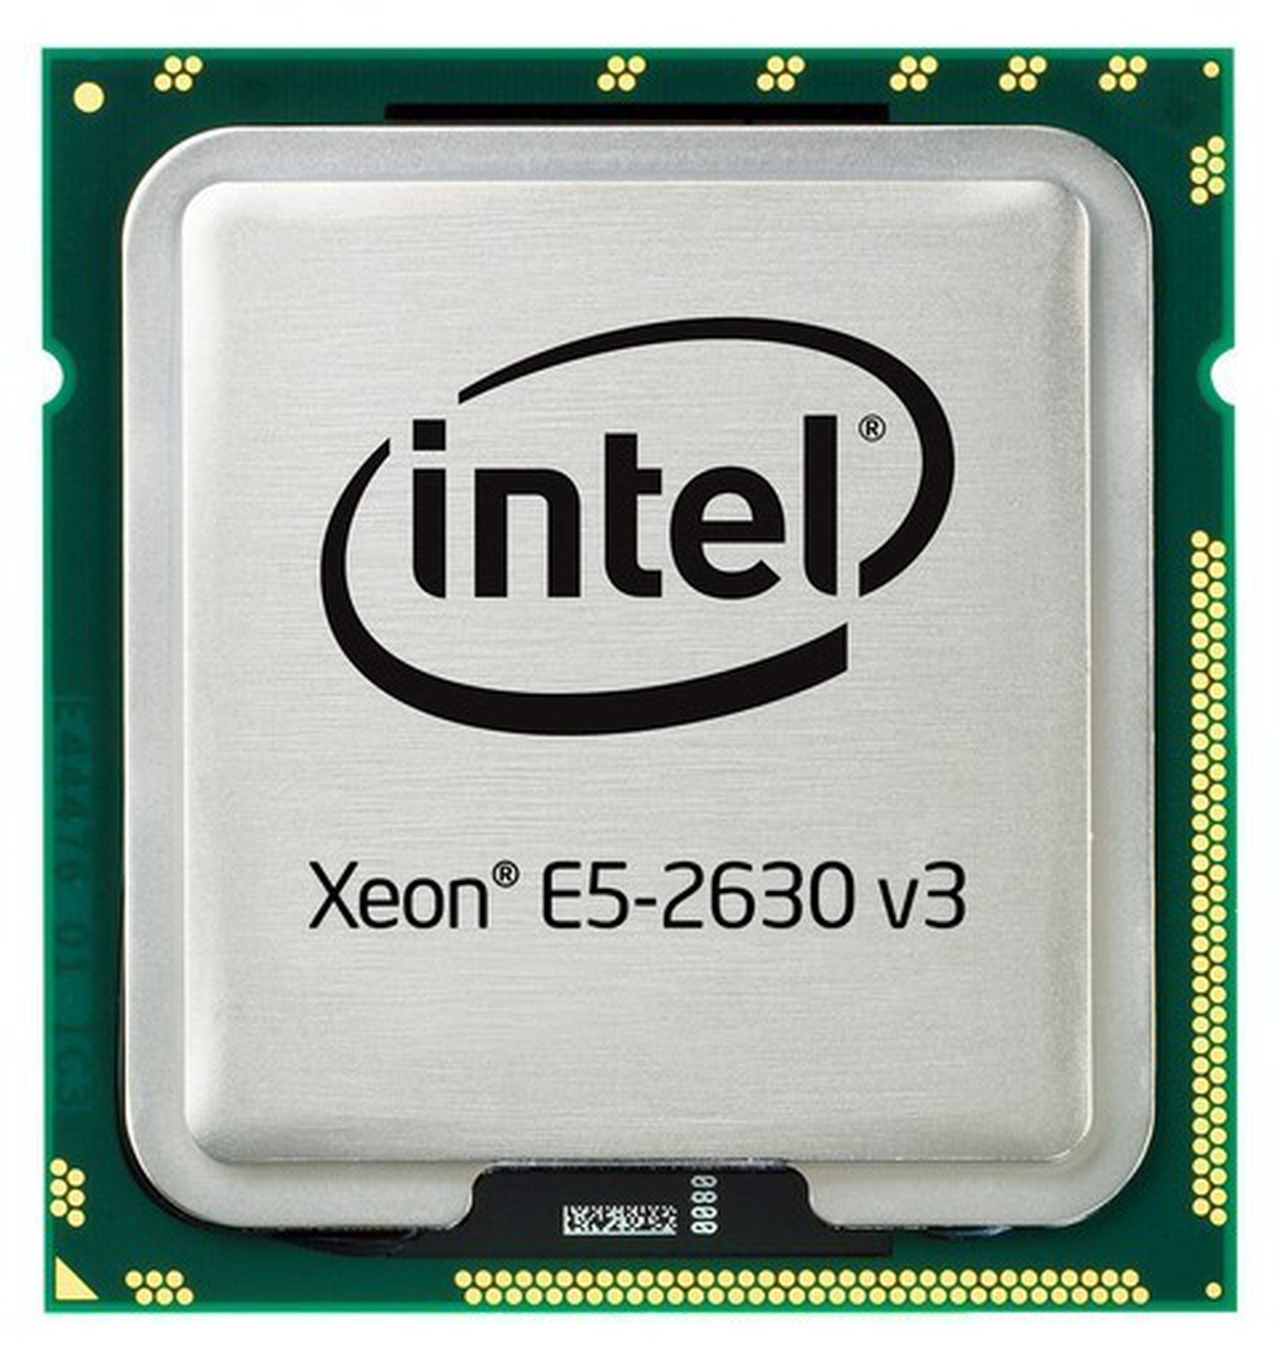 Blind vertrouwen Verwoesting tetraëder Xeon E5-2630 V3 processor kopen? - Omniserver